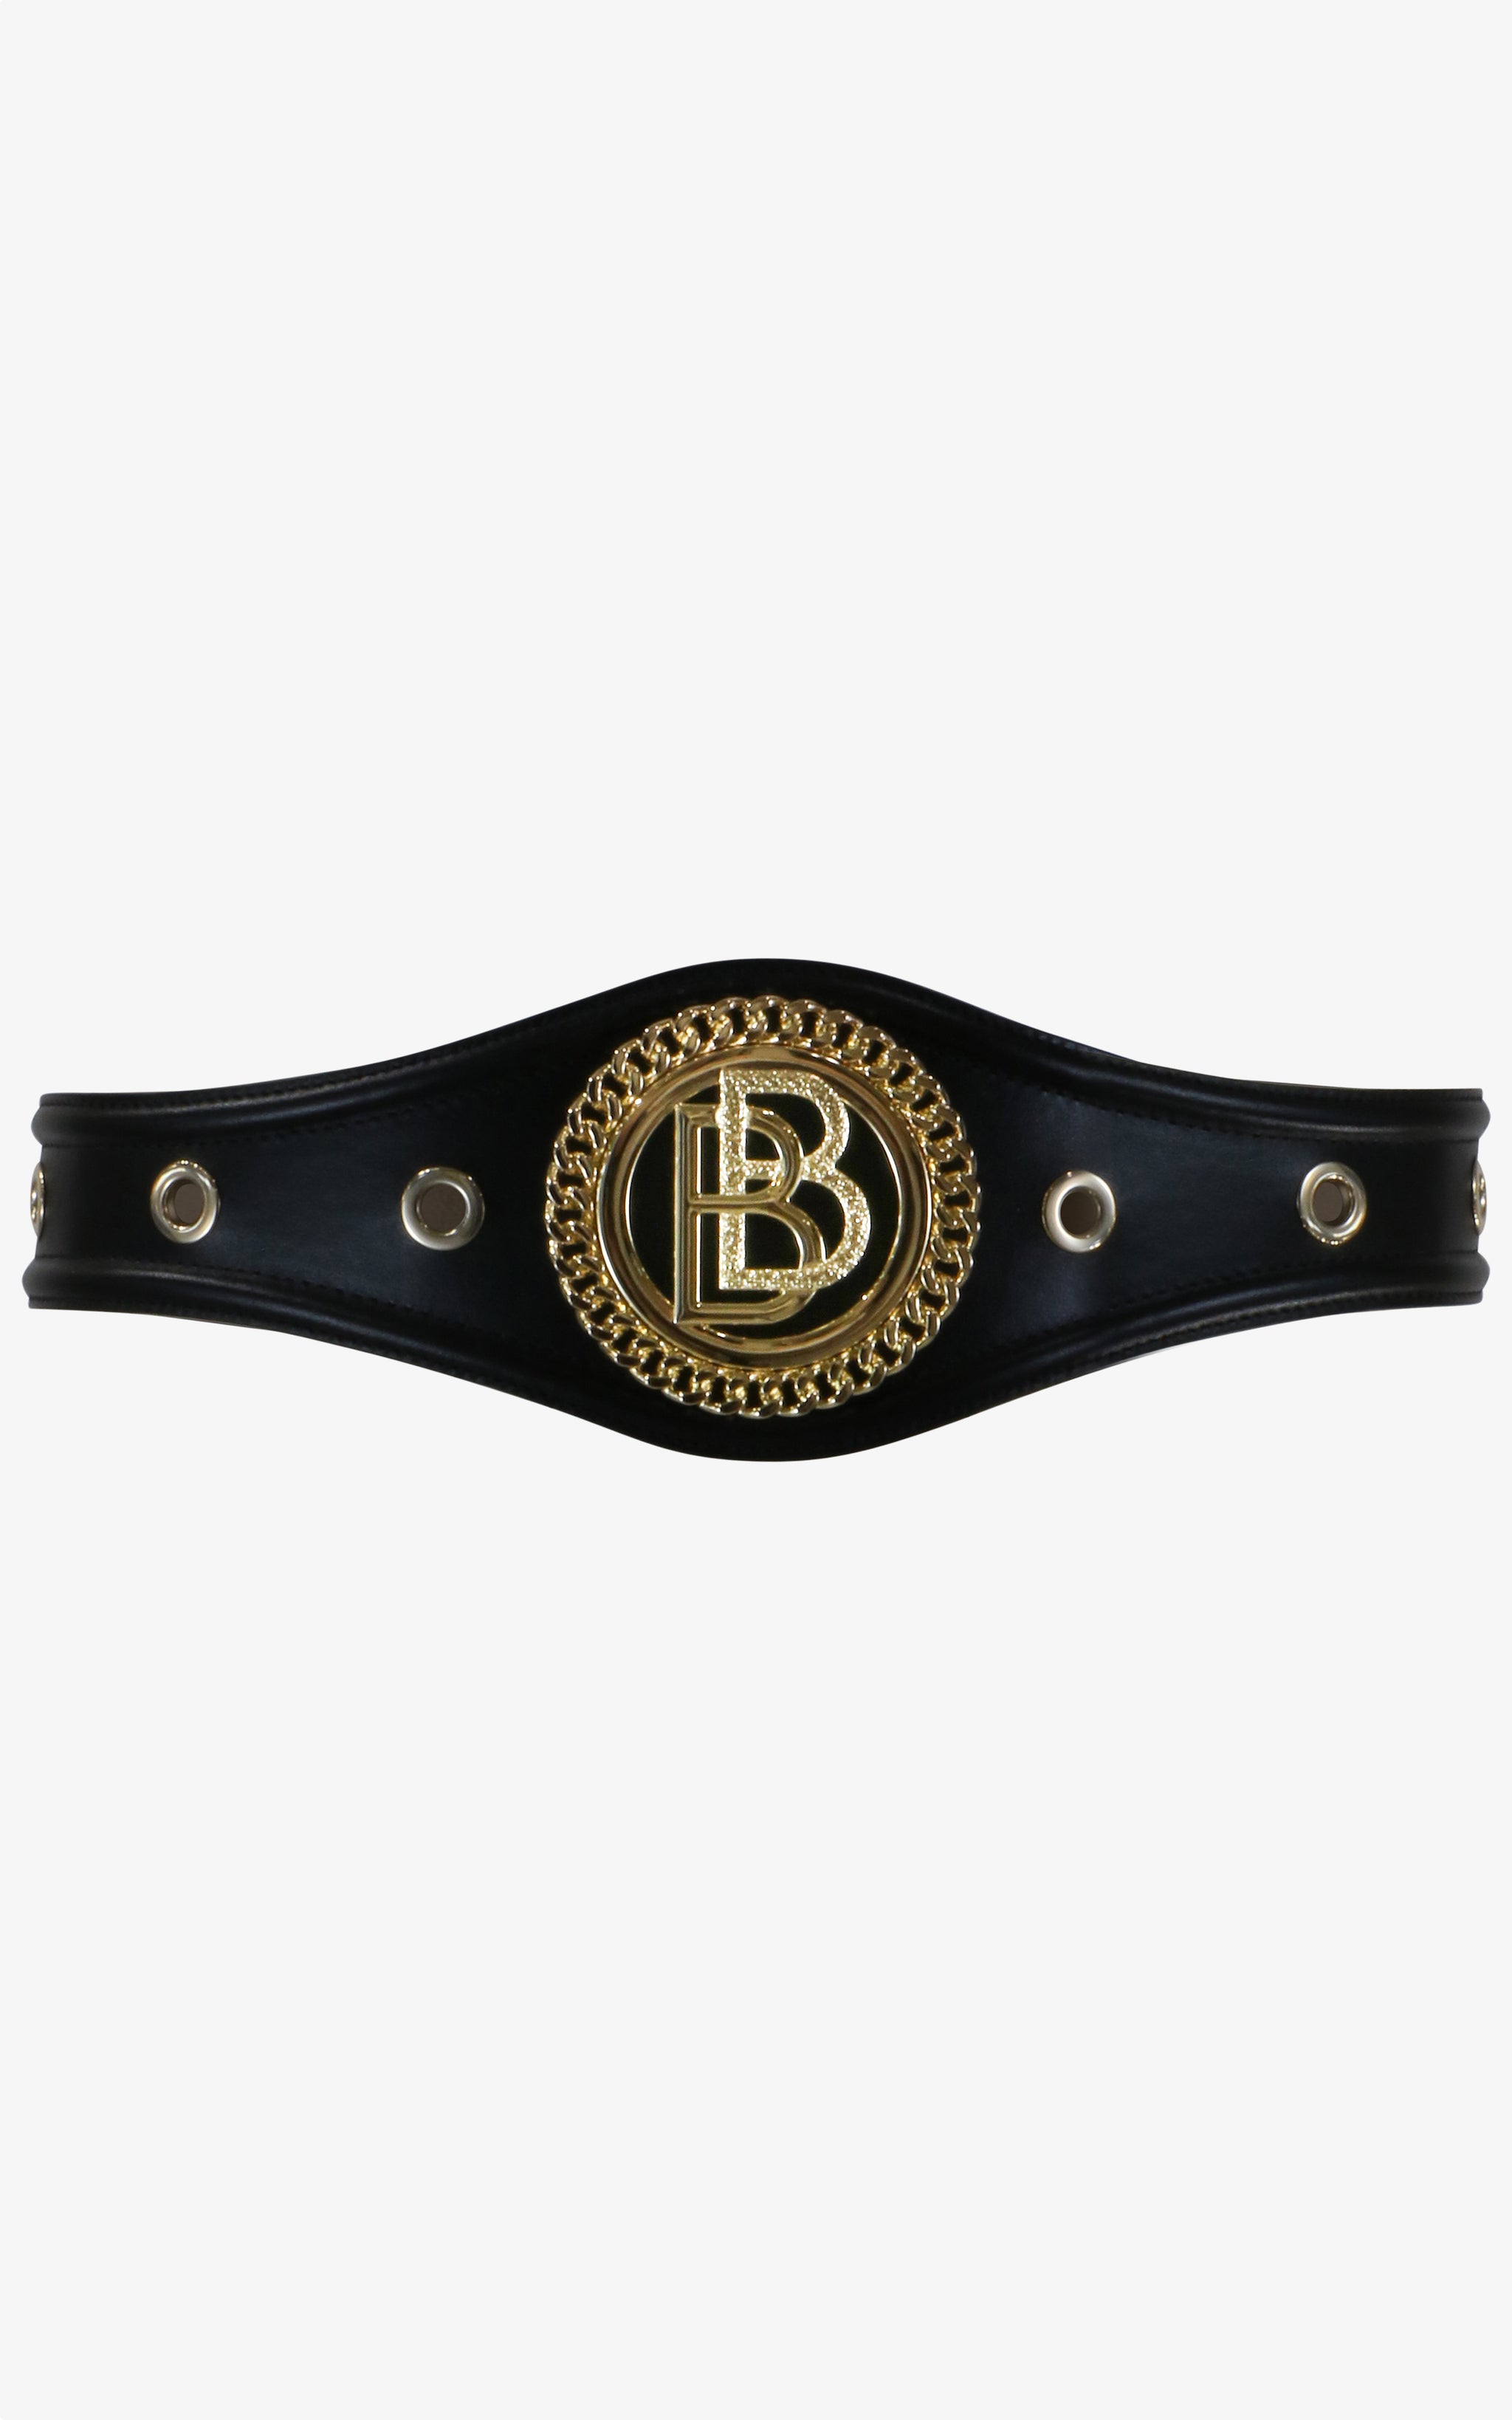 B.B. Simon Black and Gold Leather Belt Black/Gold / 46